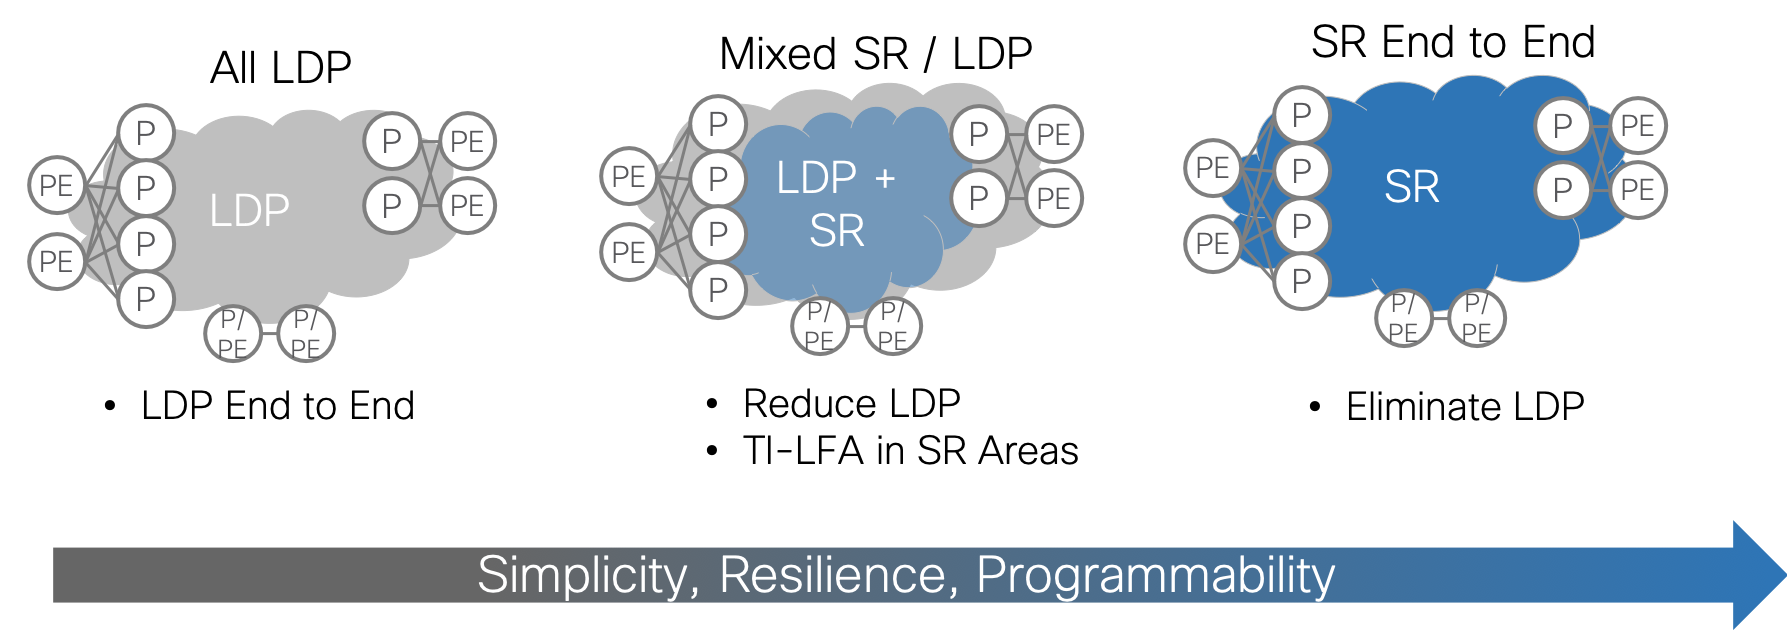 LDP to SR Core Journey